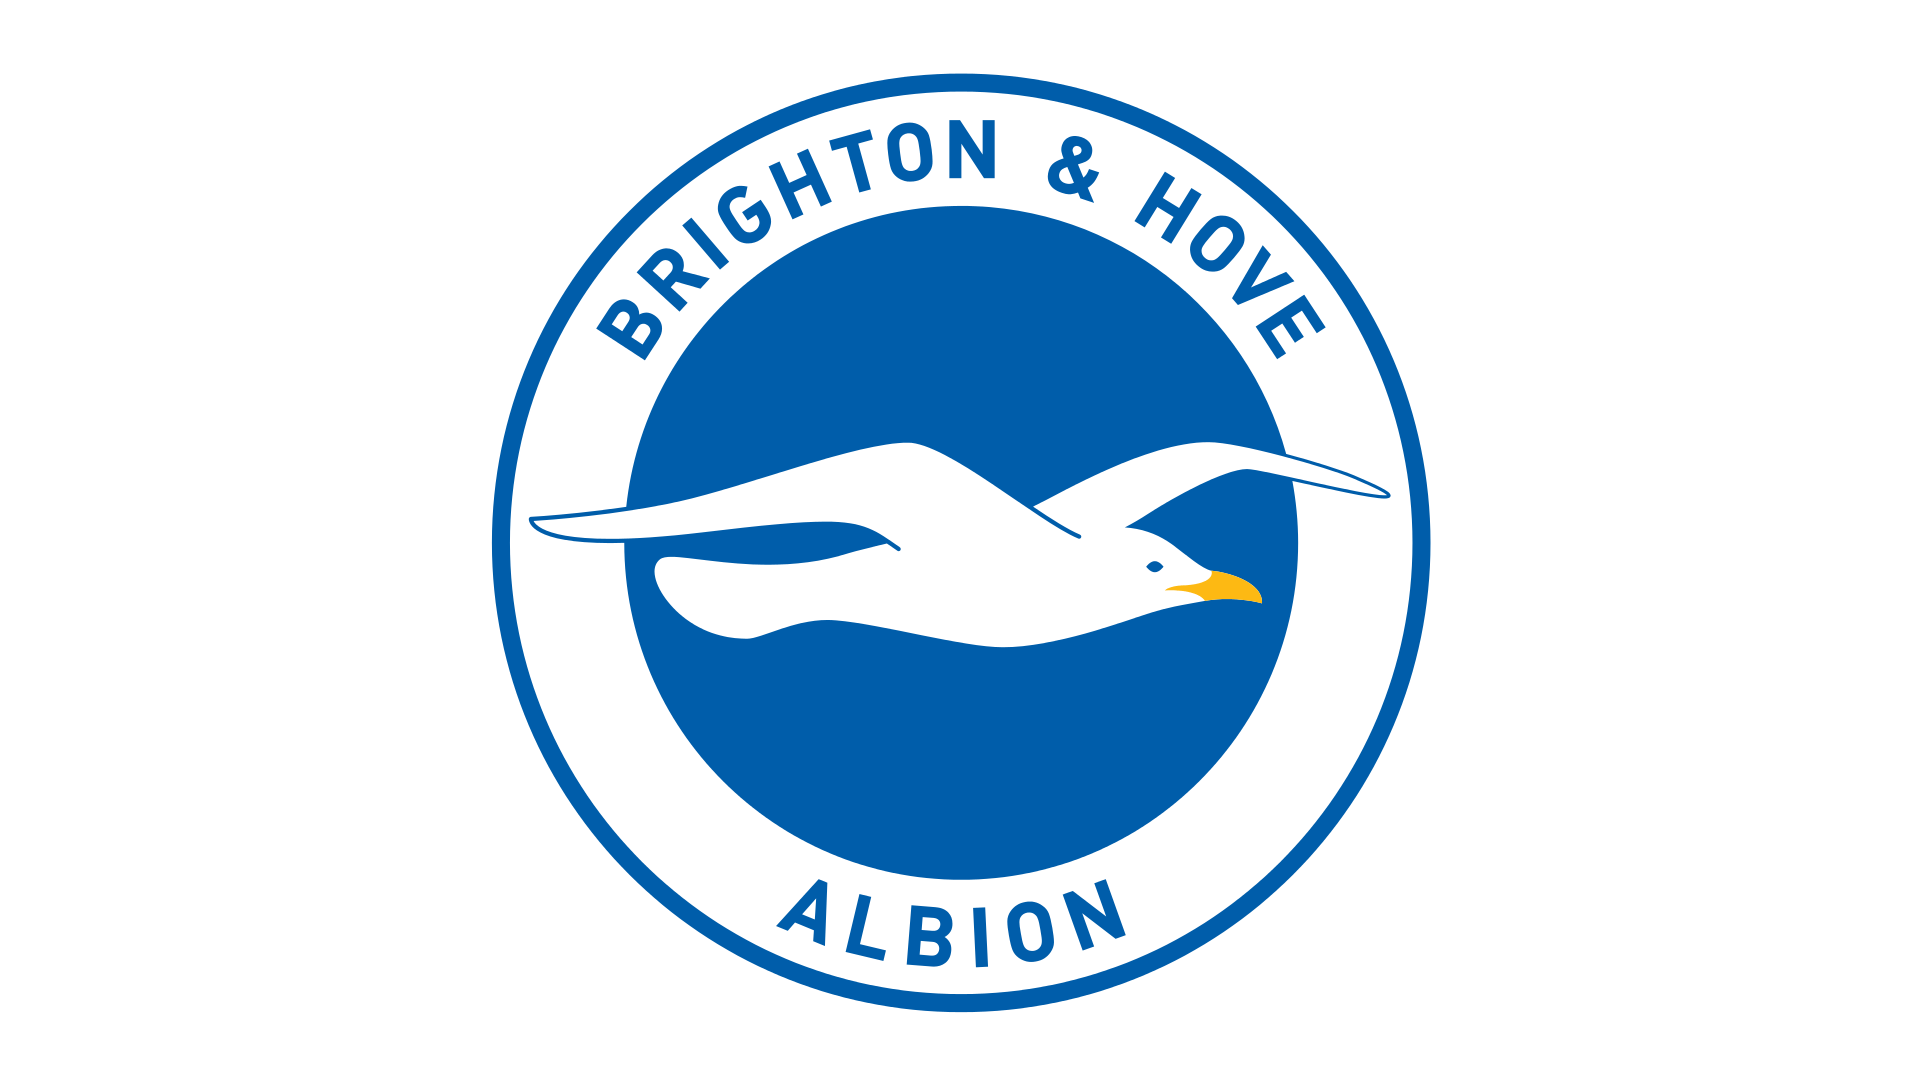 Brighton Logo - Meaning Brighton & Hove Albion logo and symbol | history and evolution